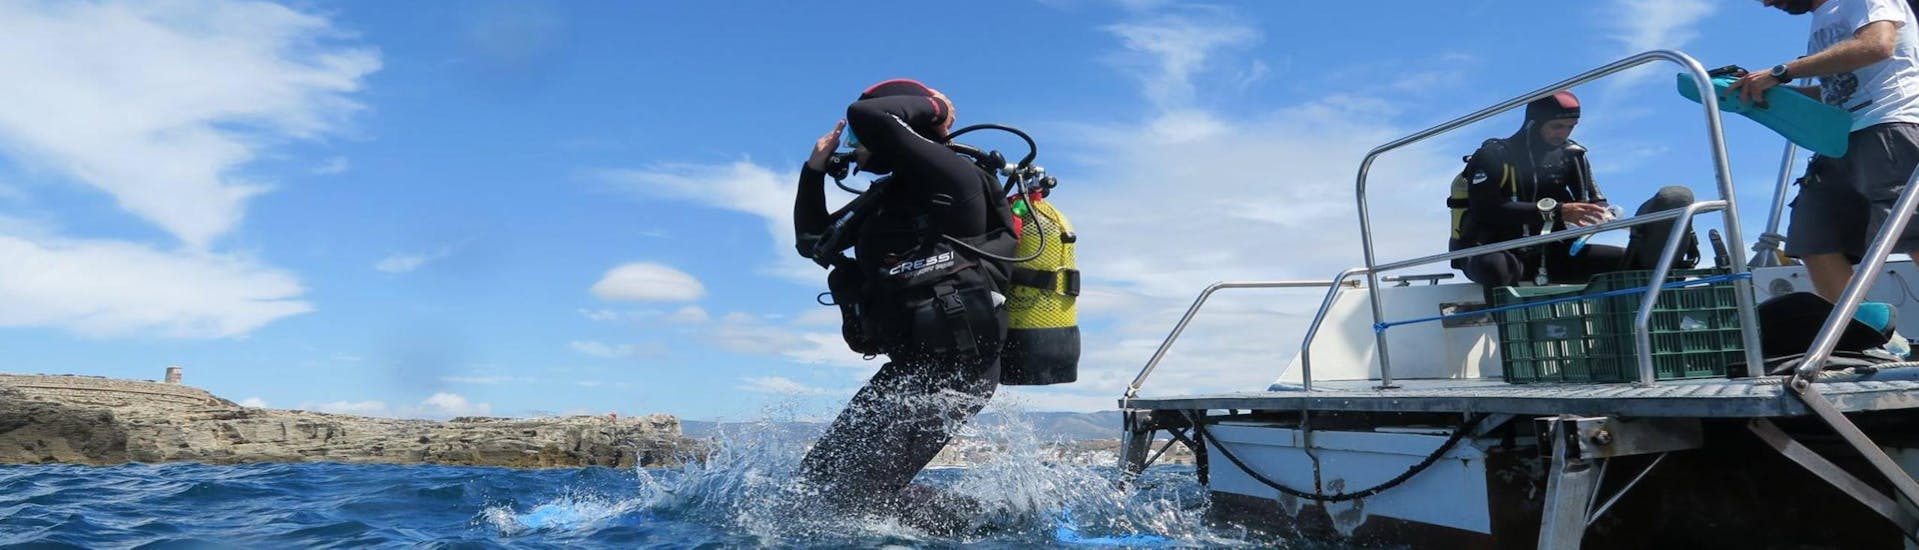 scuba-diving-course-scuba-diver-leon-marina-tarifa-hero